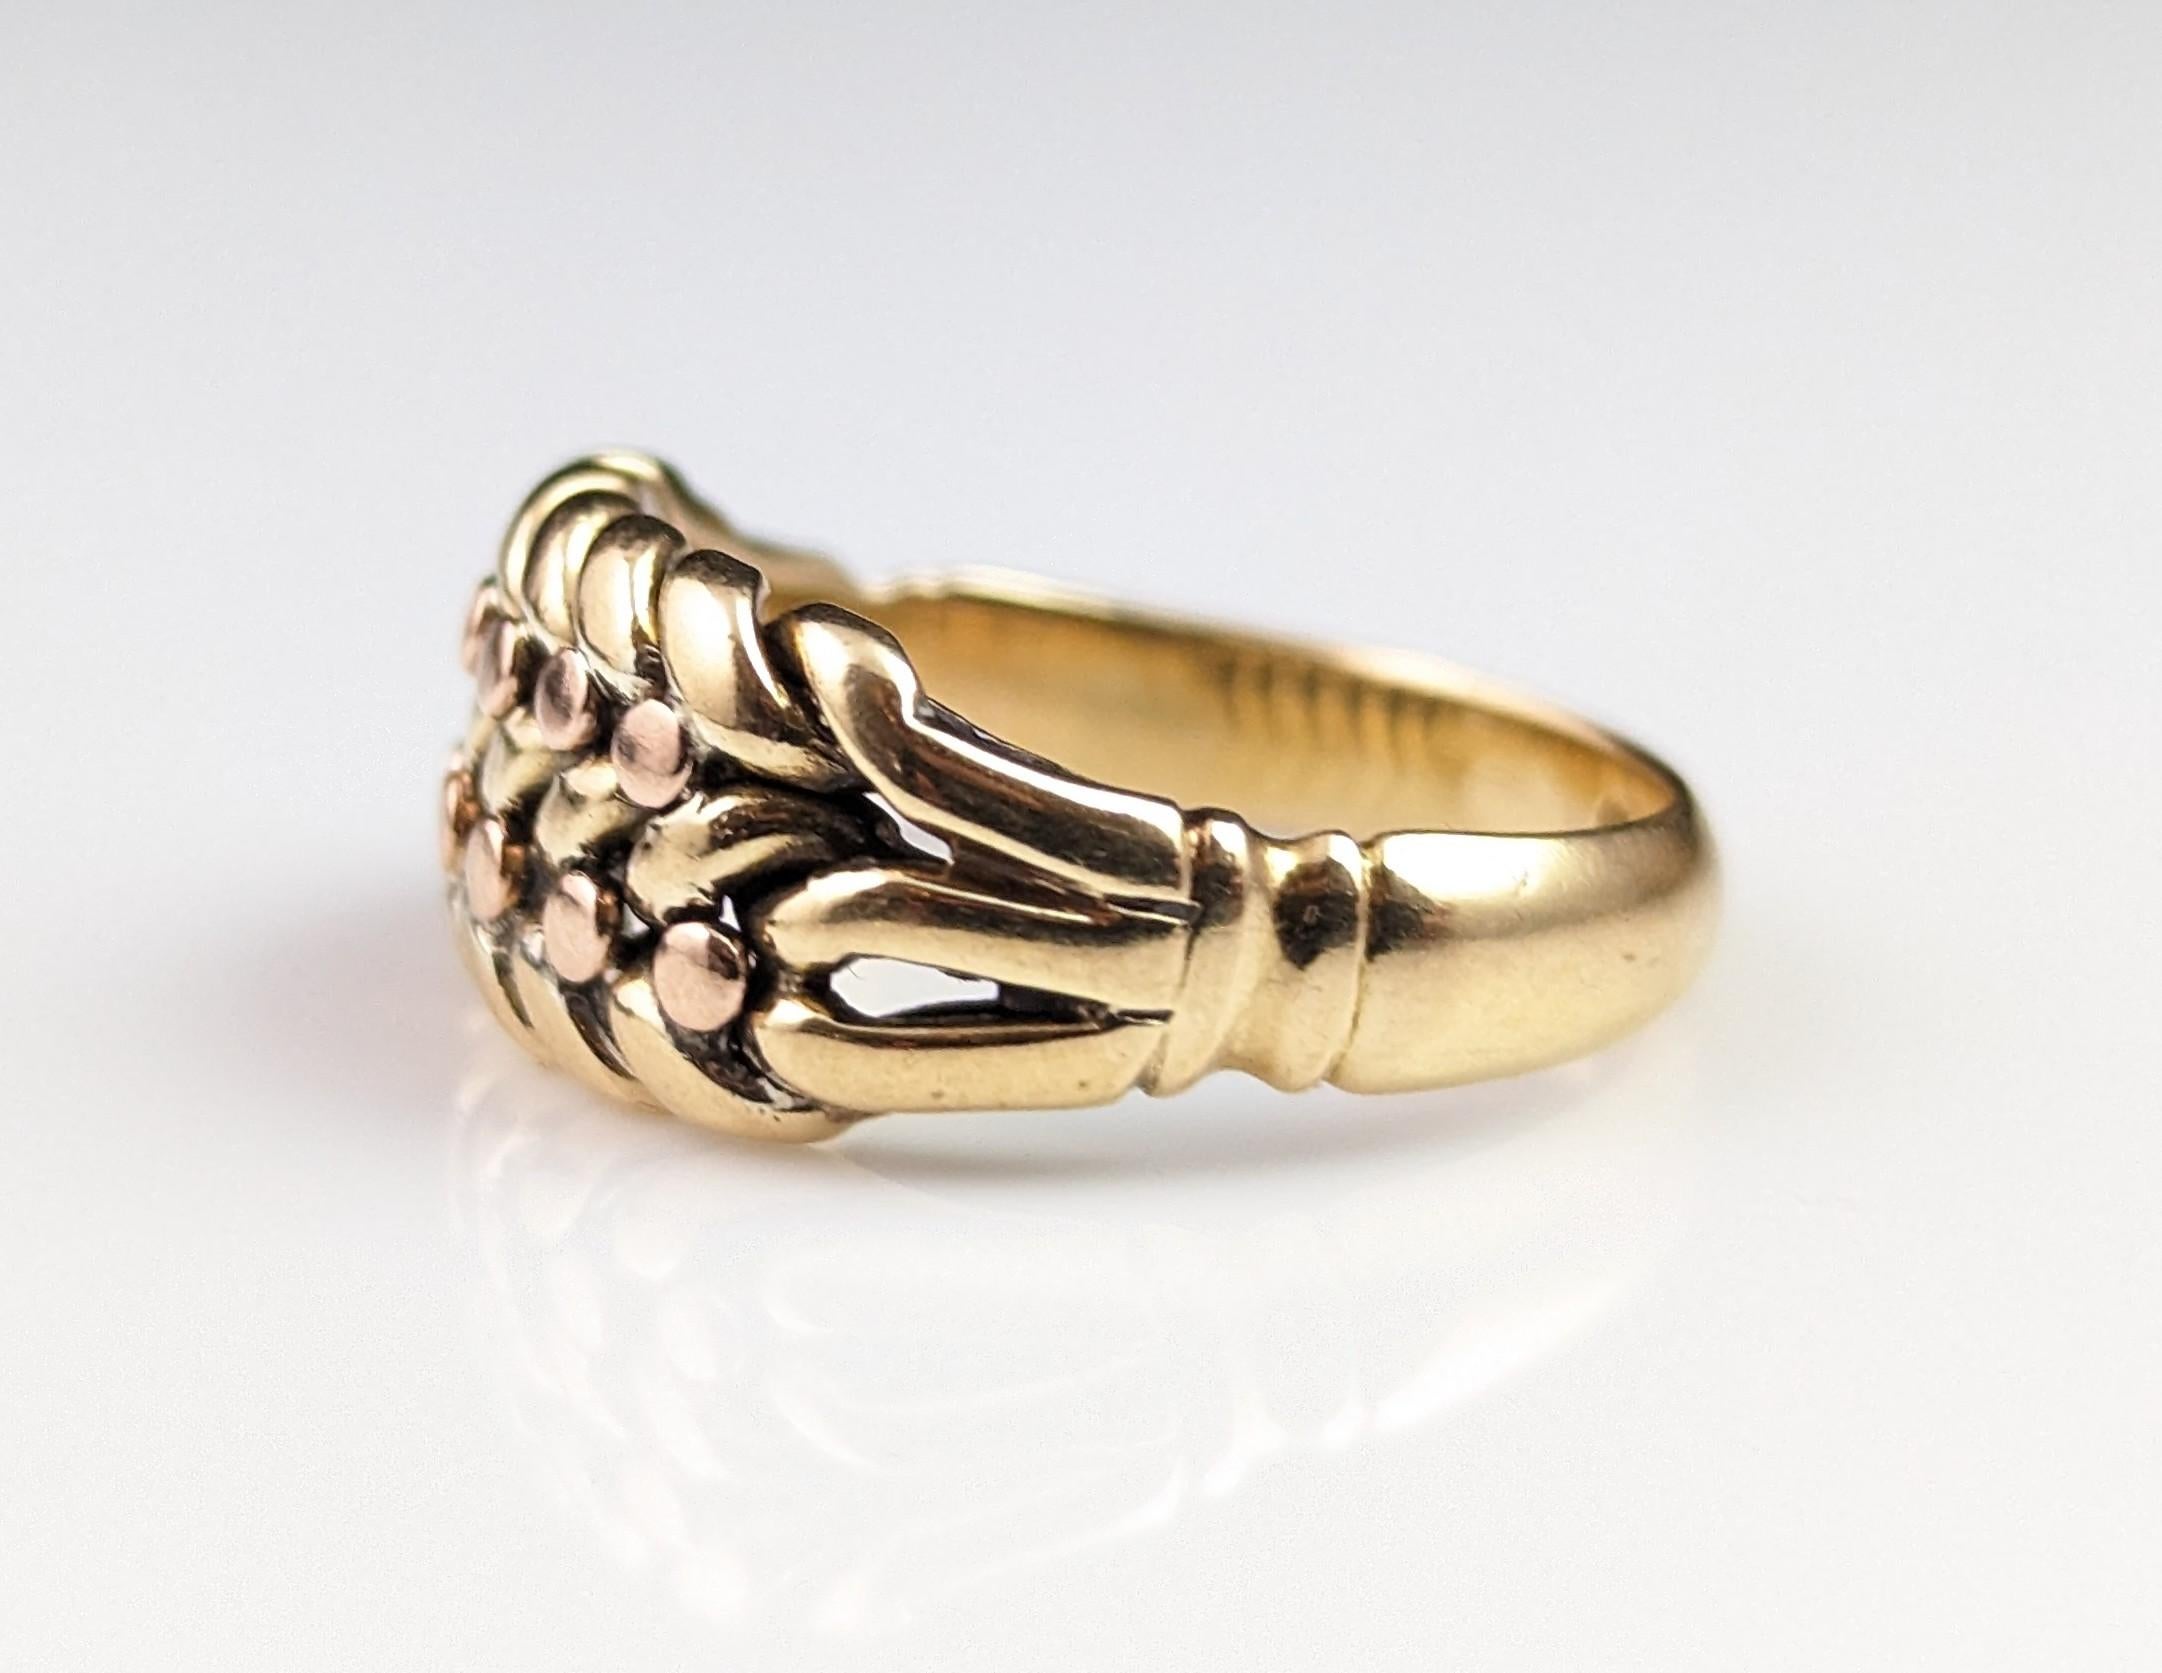 Antique 18k gold keeper ring, Edwardian, heavy  13